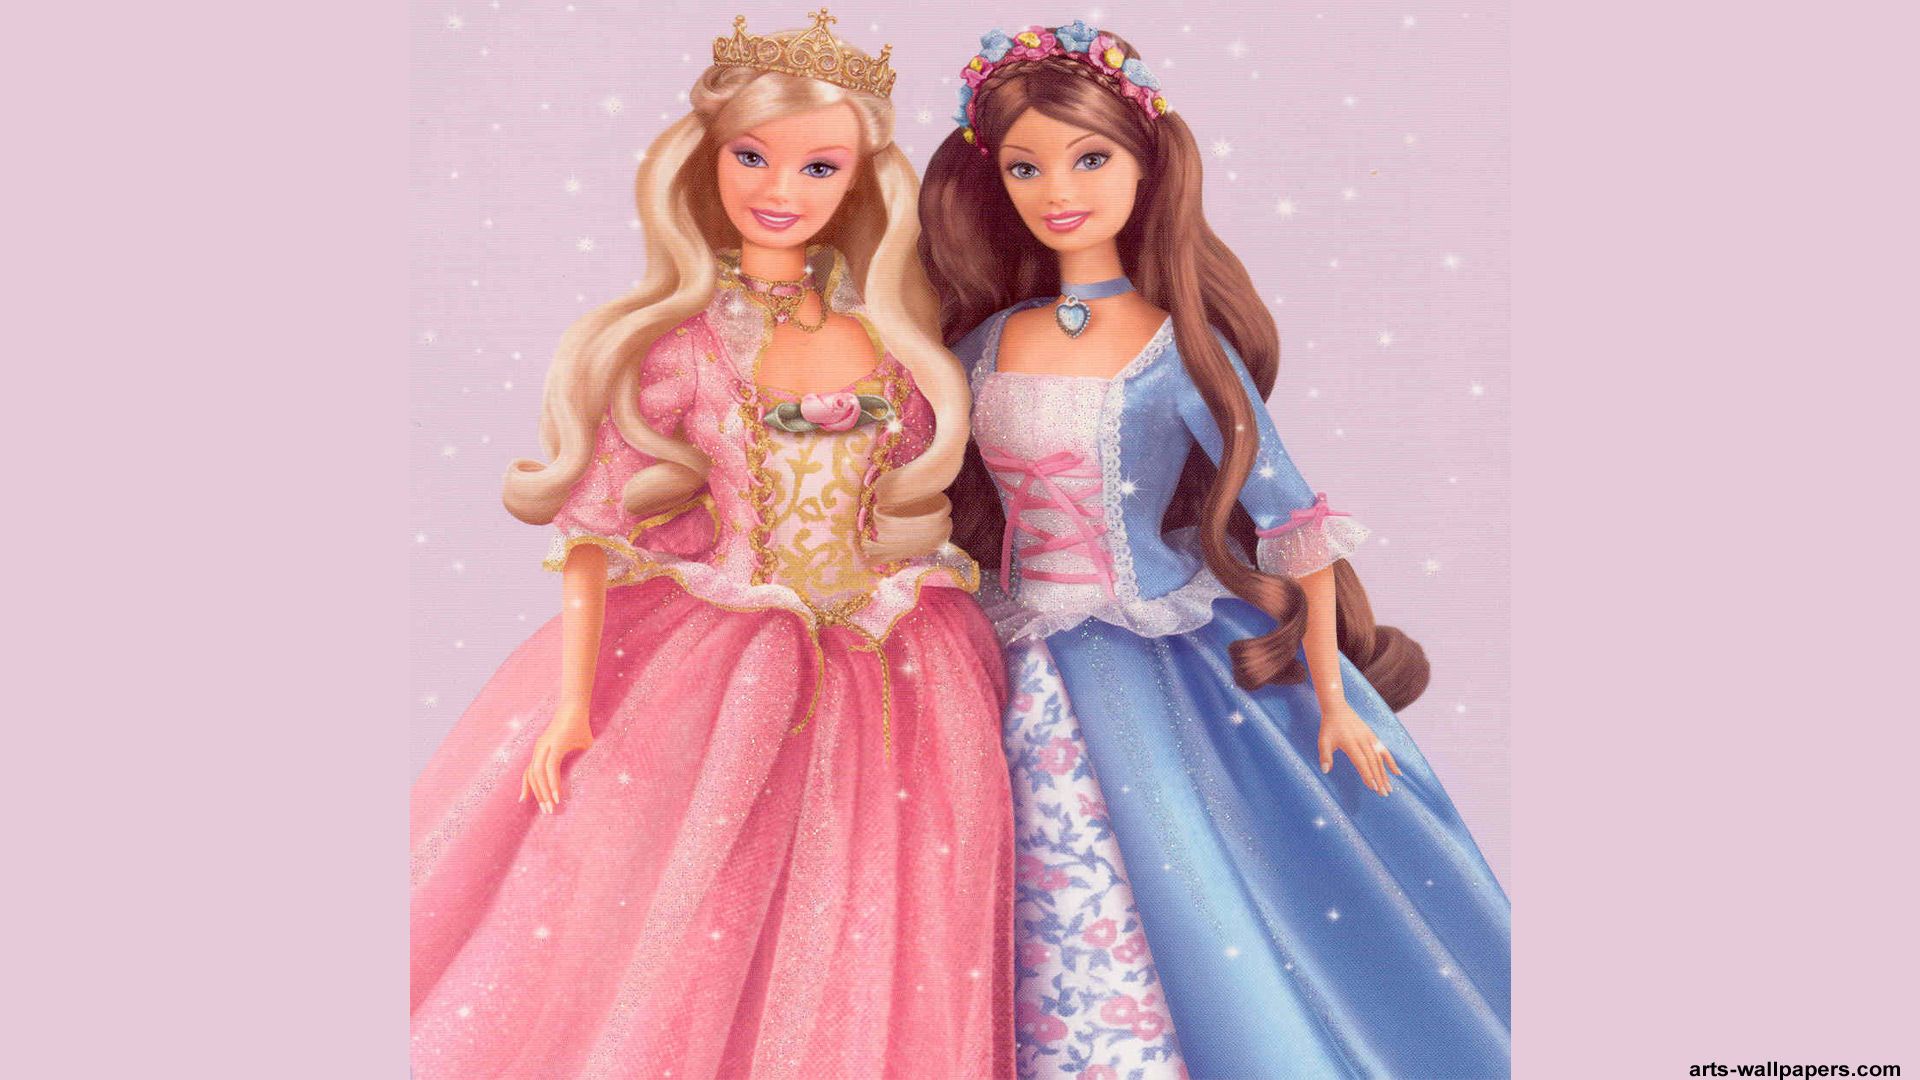 Barbie Movies Wallpaper: Barbie as the Princess and the Pauper wallpaper. Barbie dress, Barbie princess, Princess barbie dolls